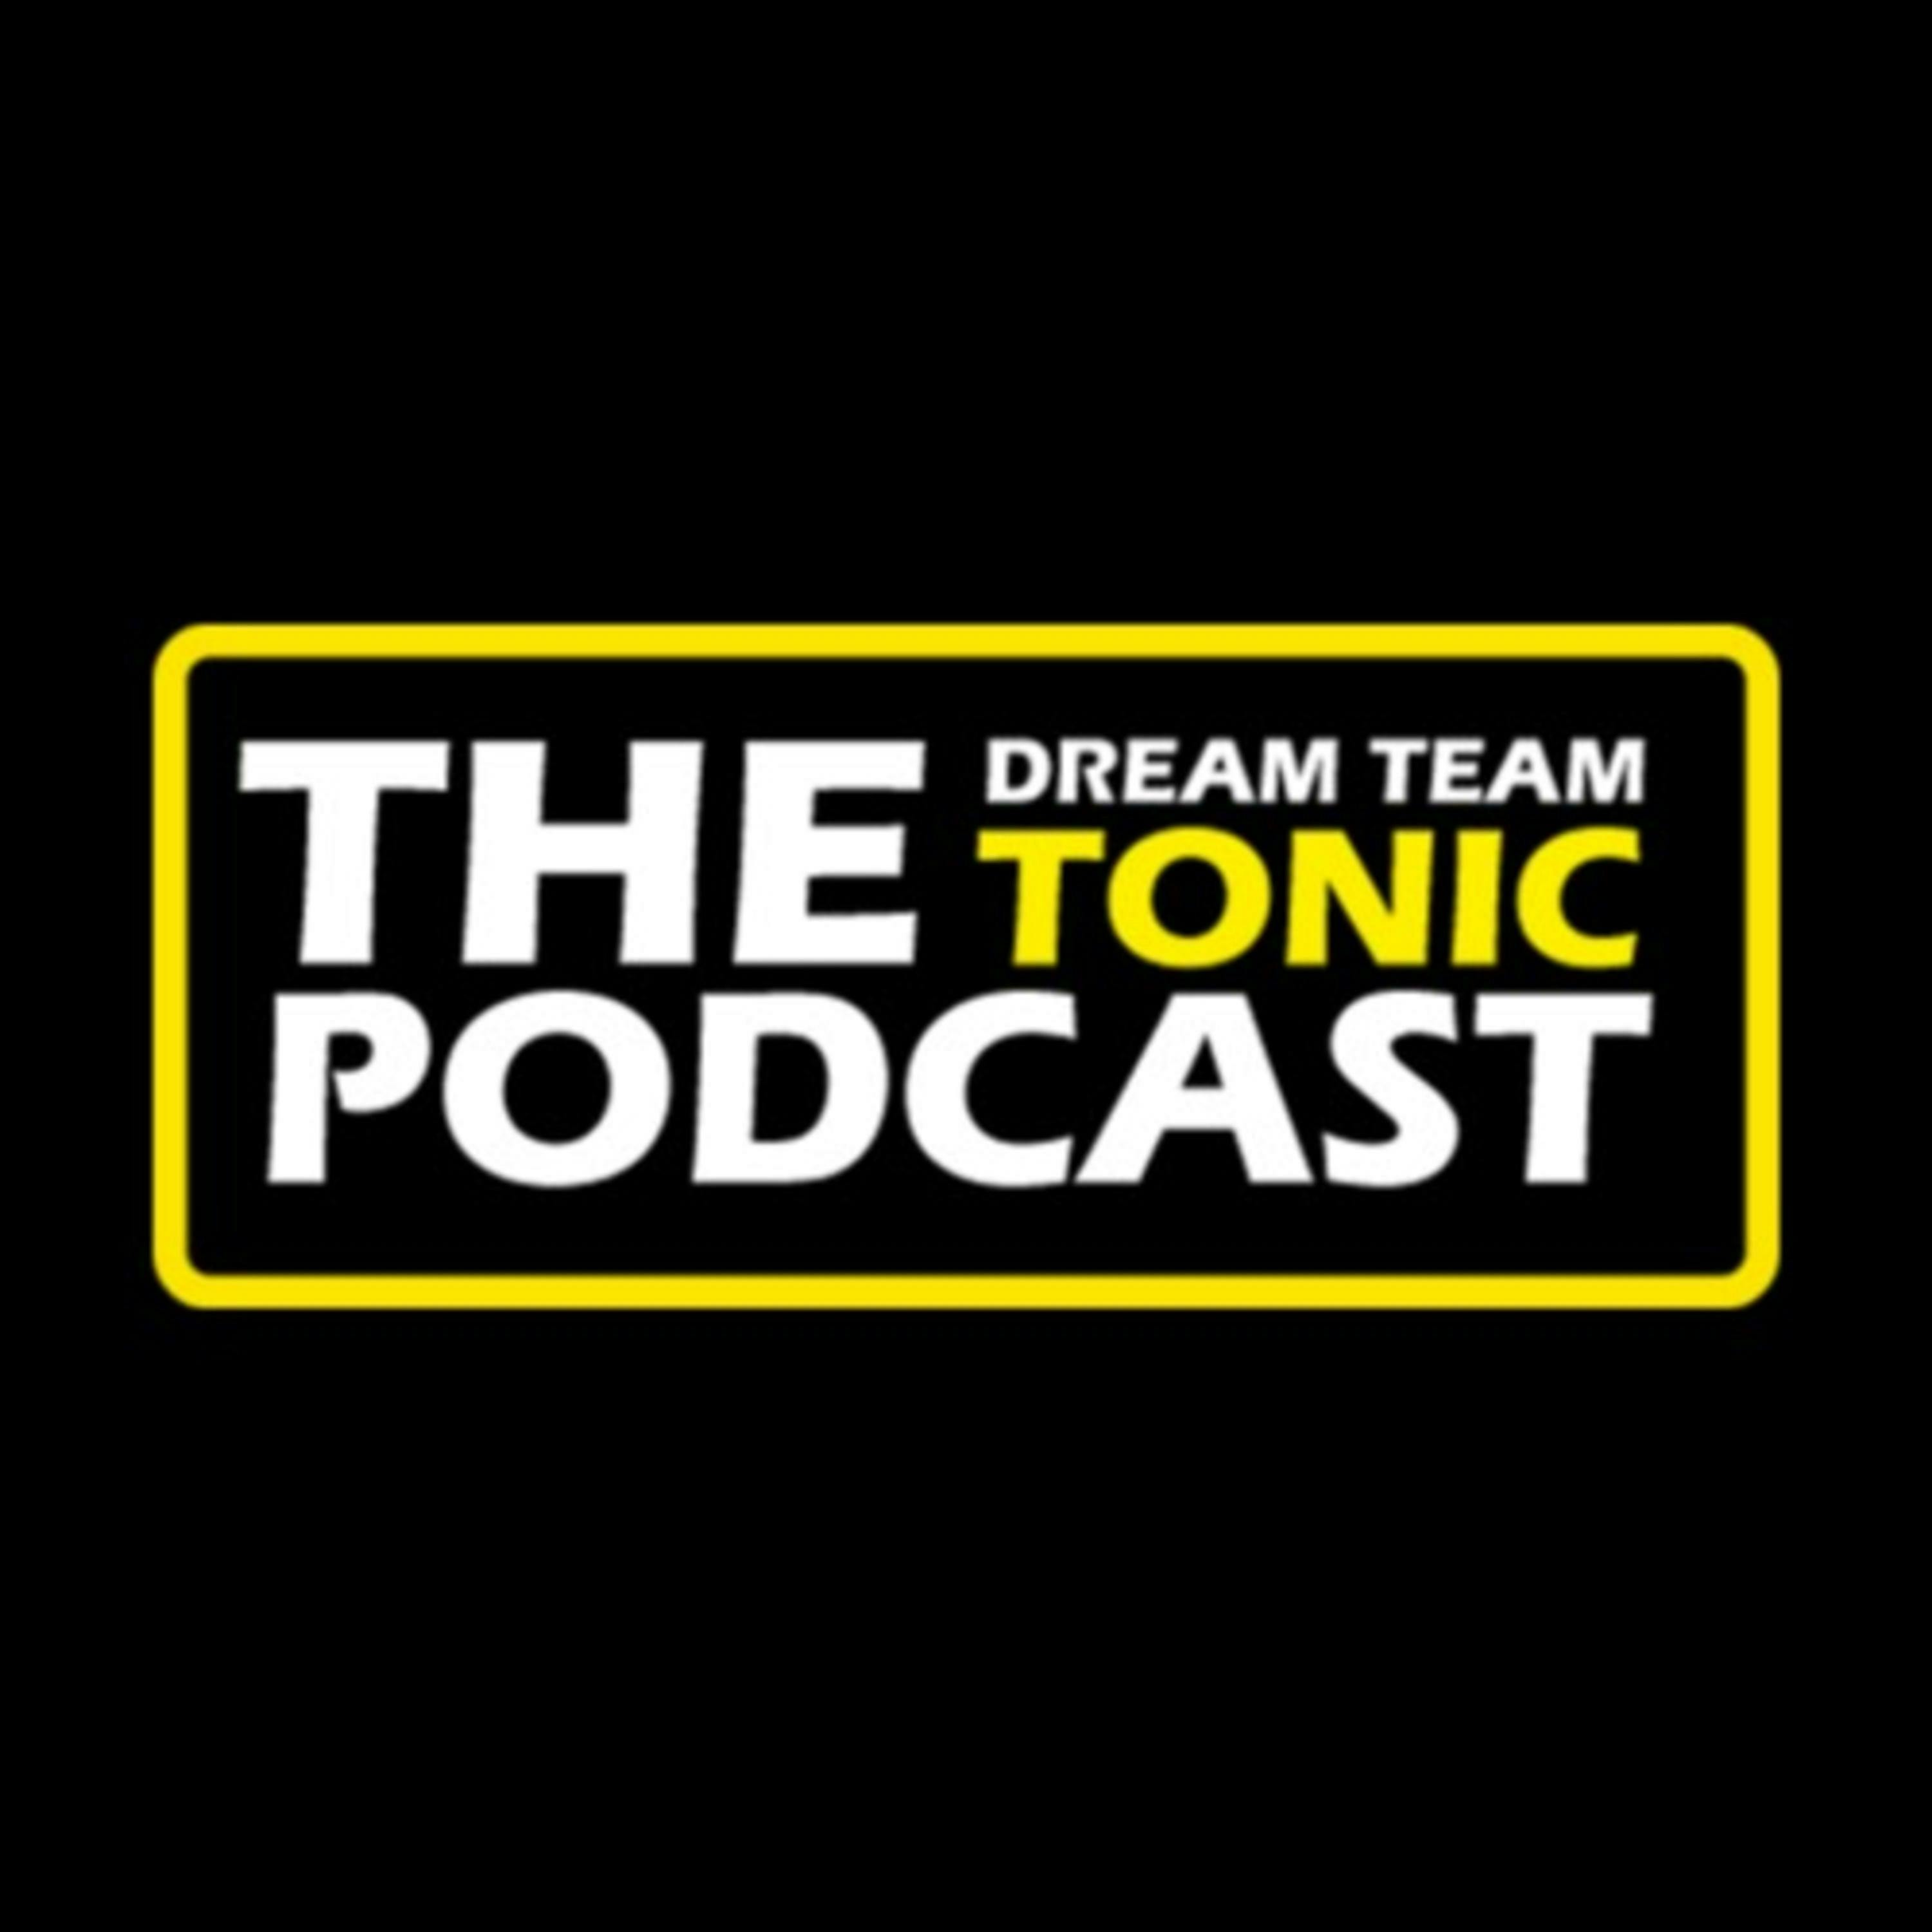 Dream Team Tonic Podcast Season 2 Episode 5